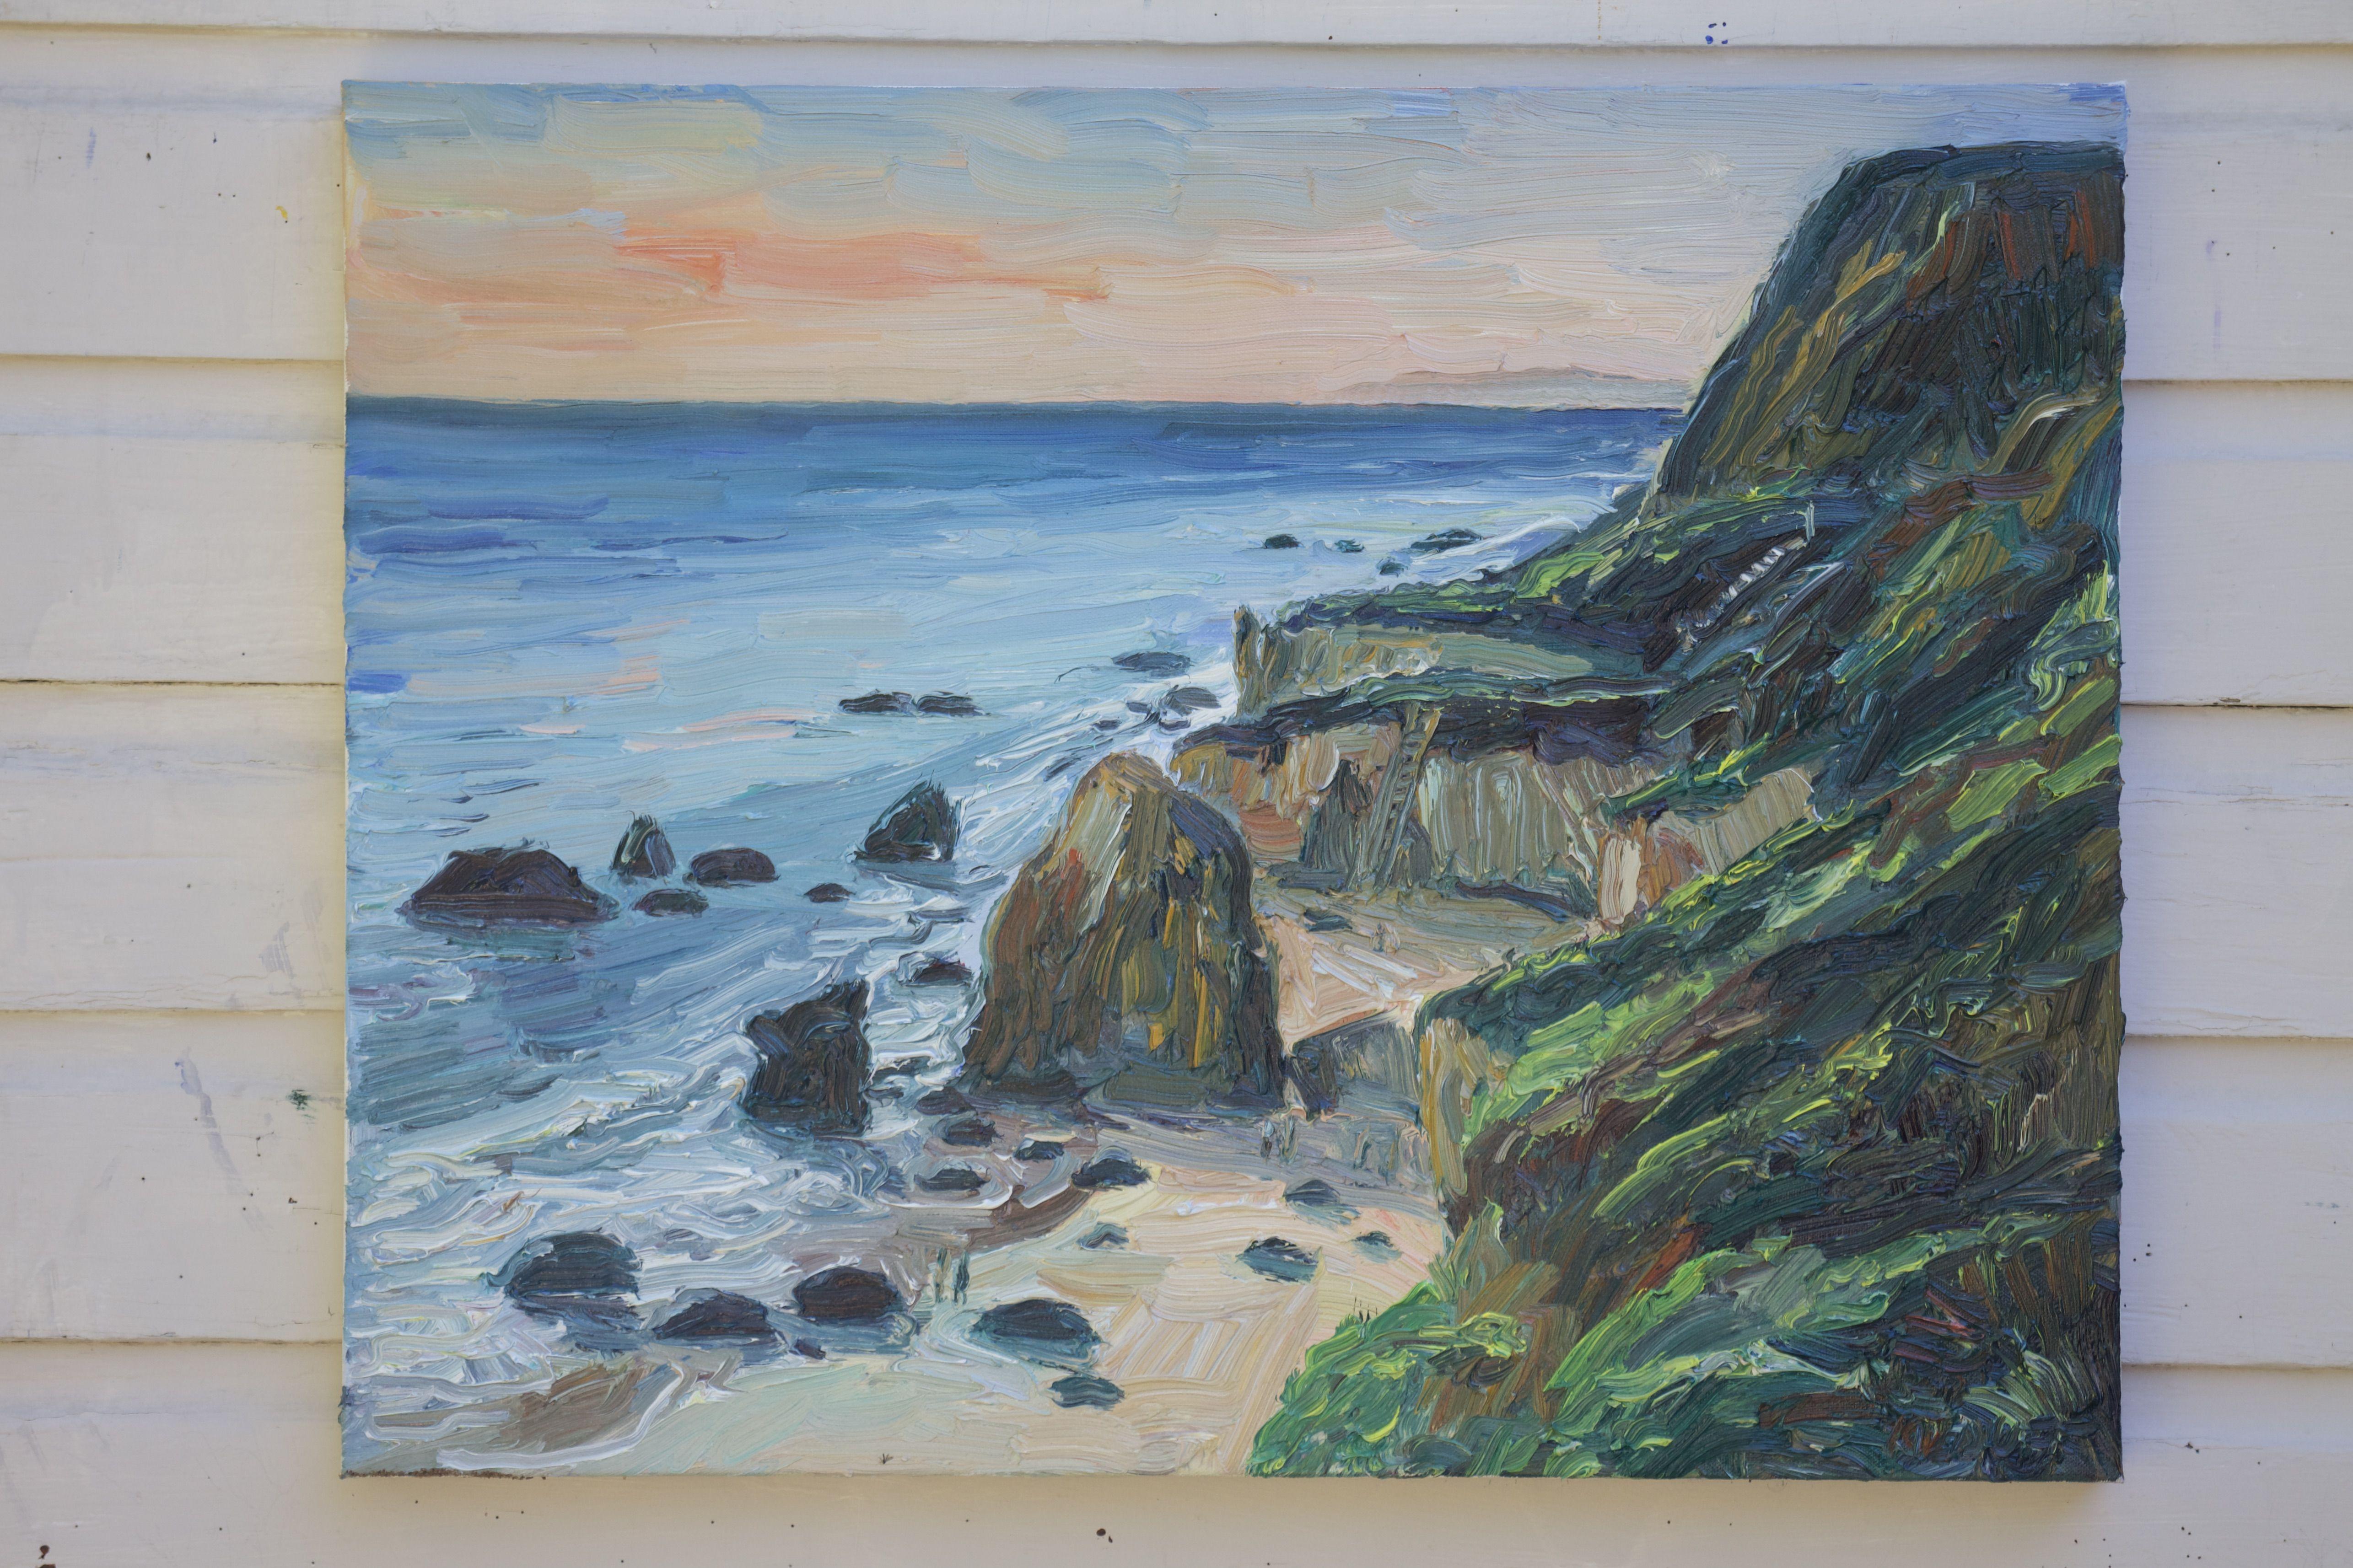 Matador Beach, Malibu, Gemälde, Öl auf Leinwand (Impressionismus), Painting, von John Kilduff